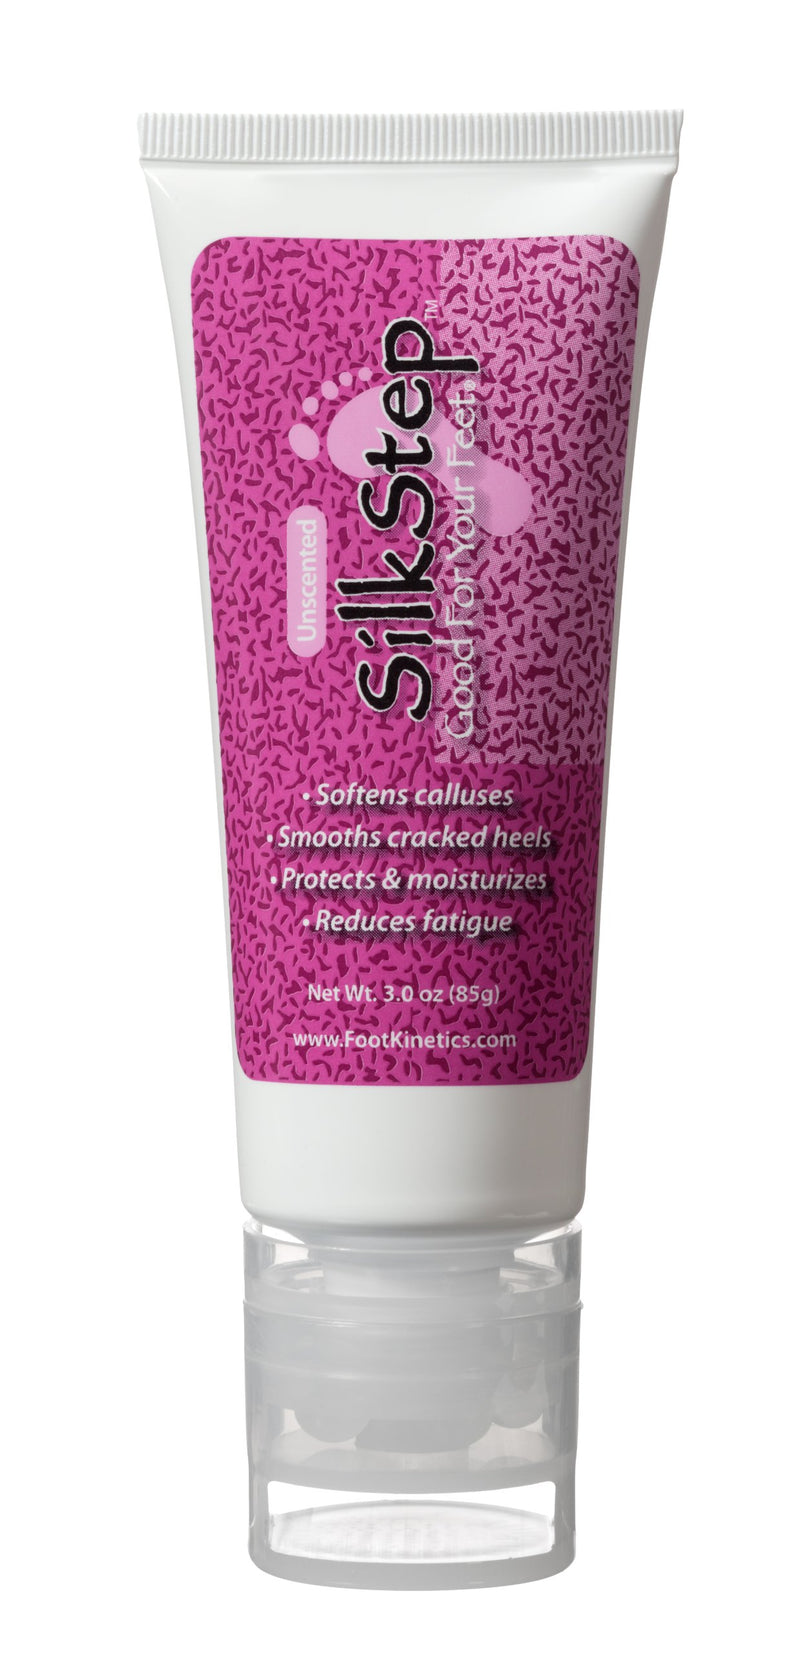 SilkStep Protective Foot Cream (8 oz) 8 Ounce - BeesActive Australia